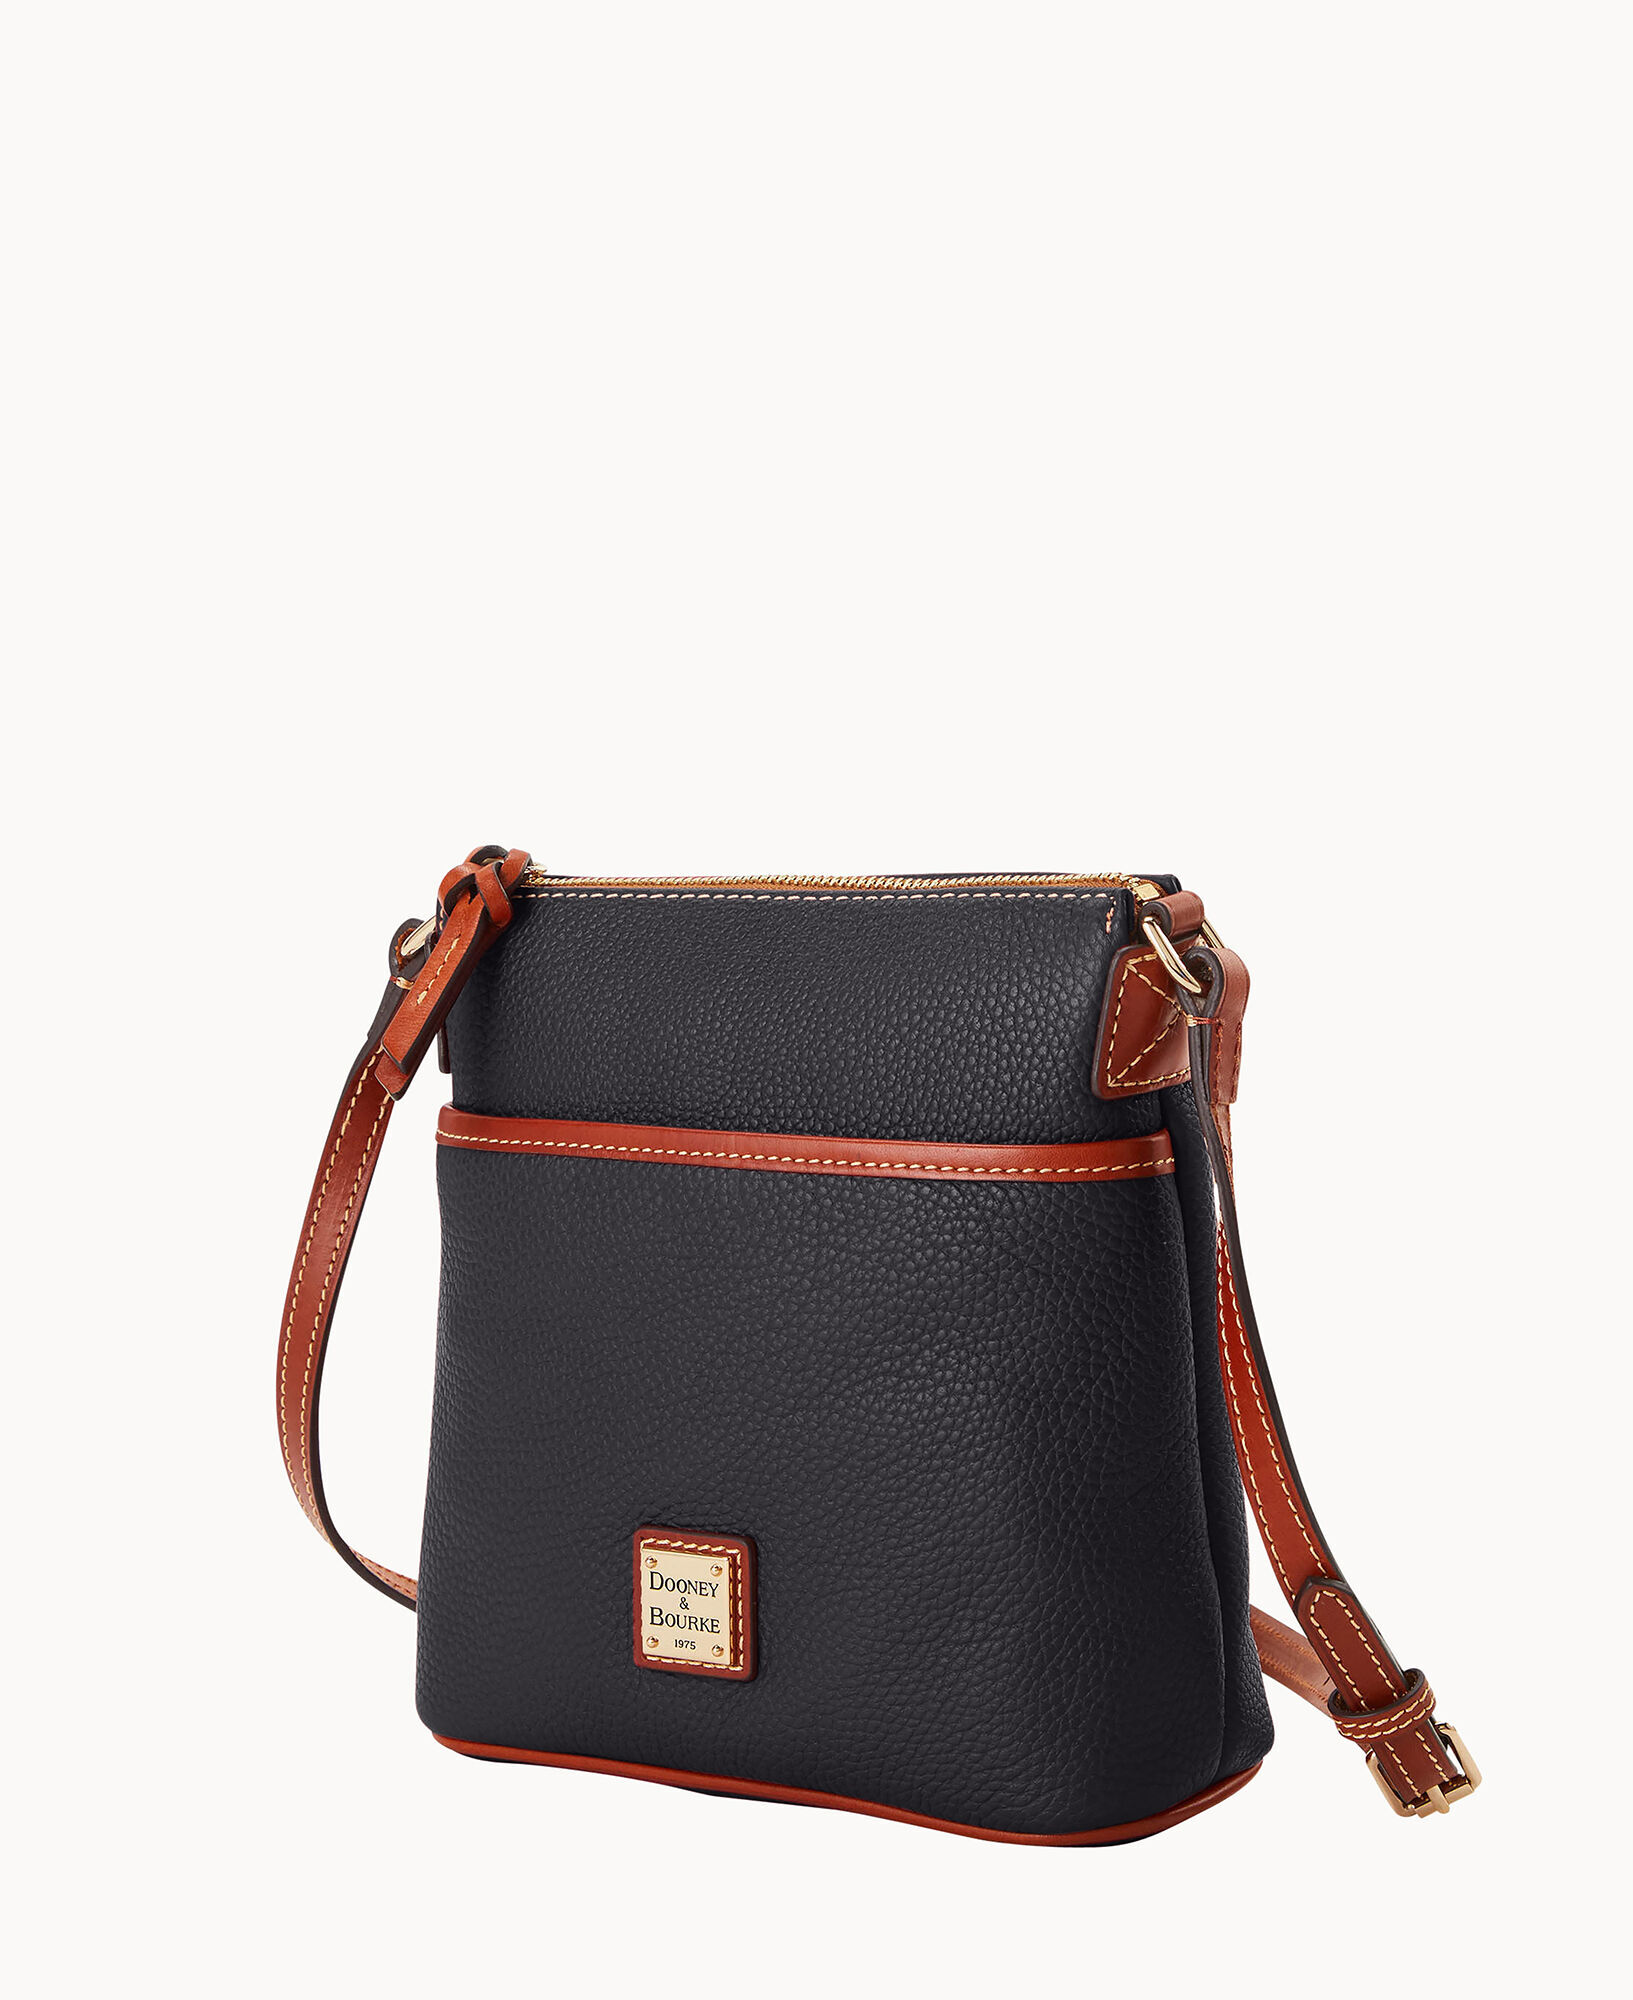 Two-Way Pebble Leather Crossbody Bag